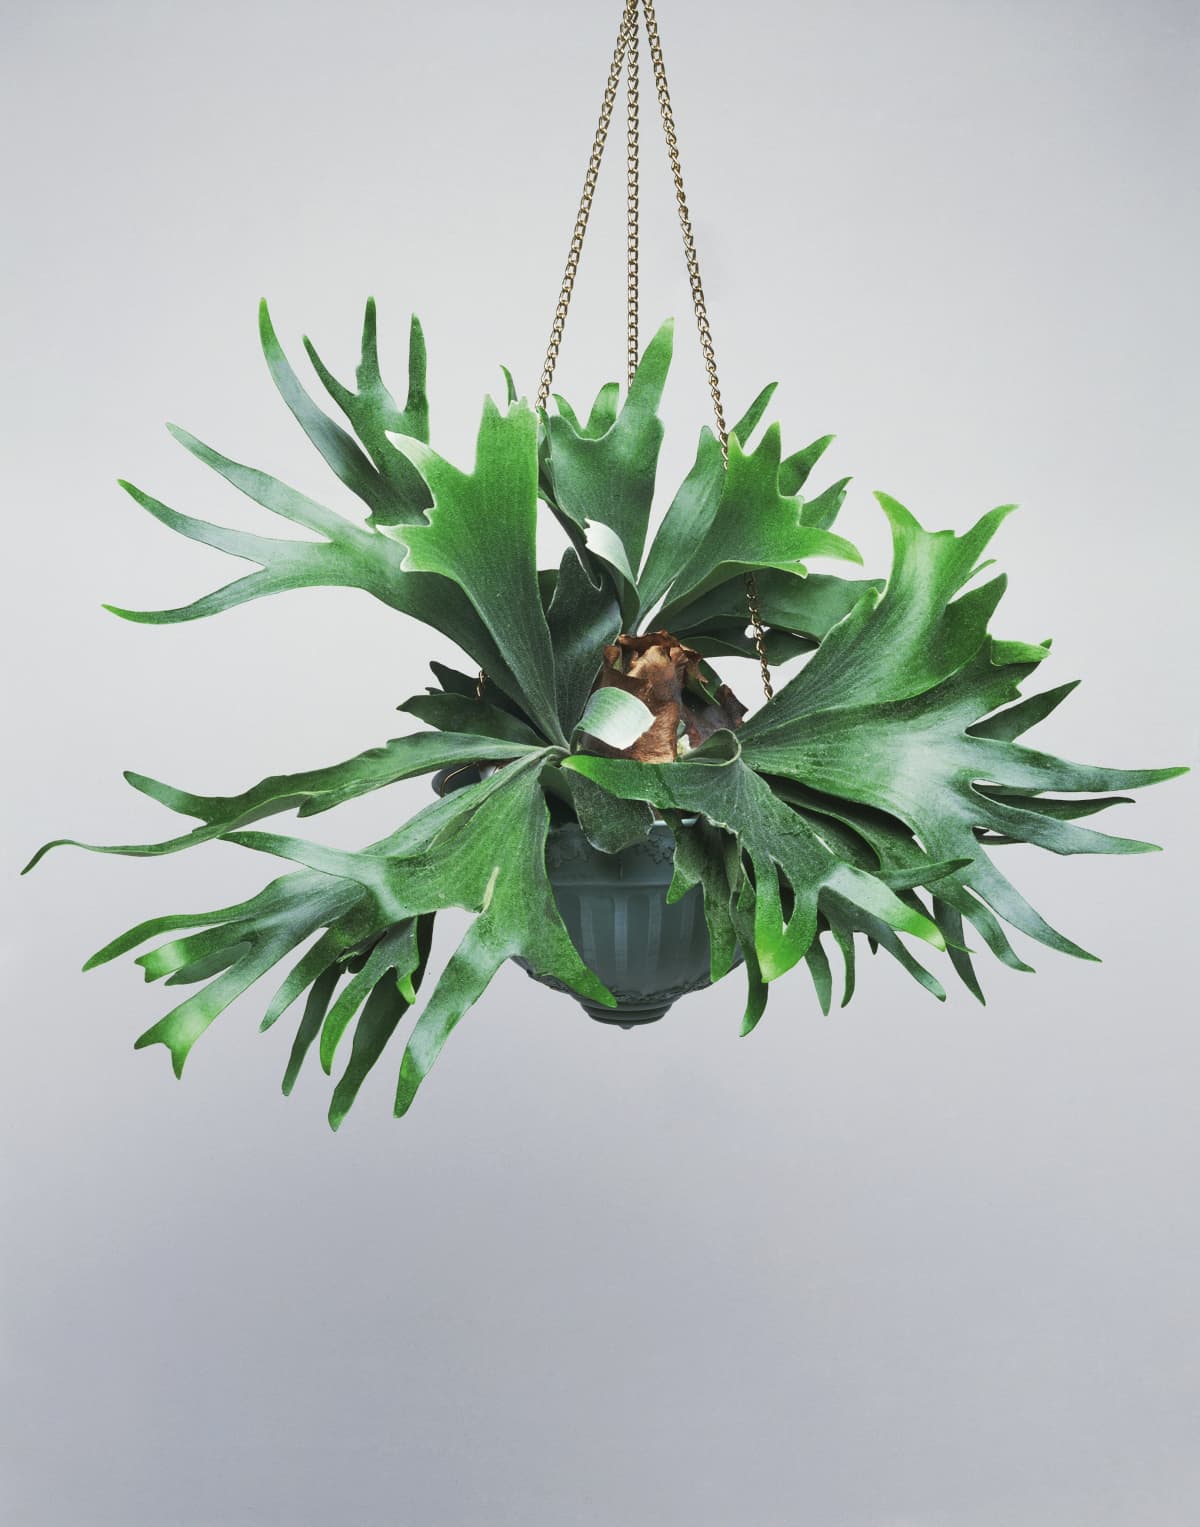 Elkhorn or Staghorn fern displayed in a hanging pot